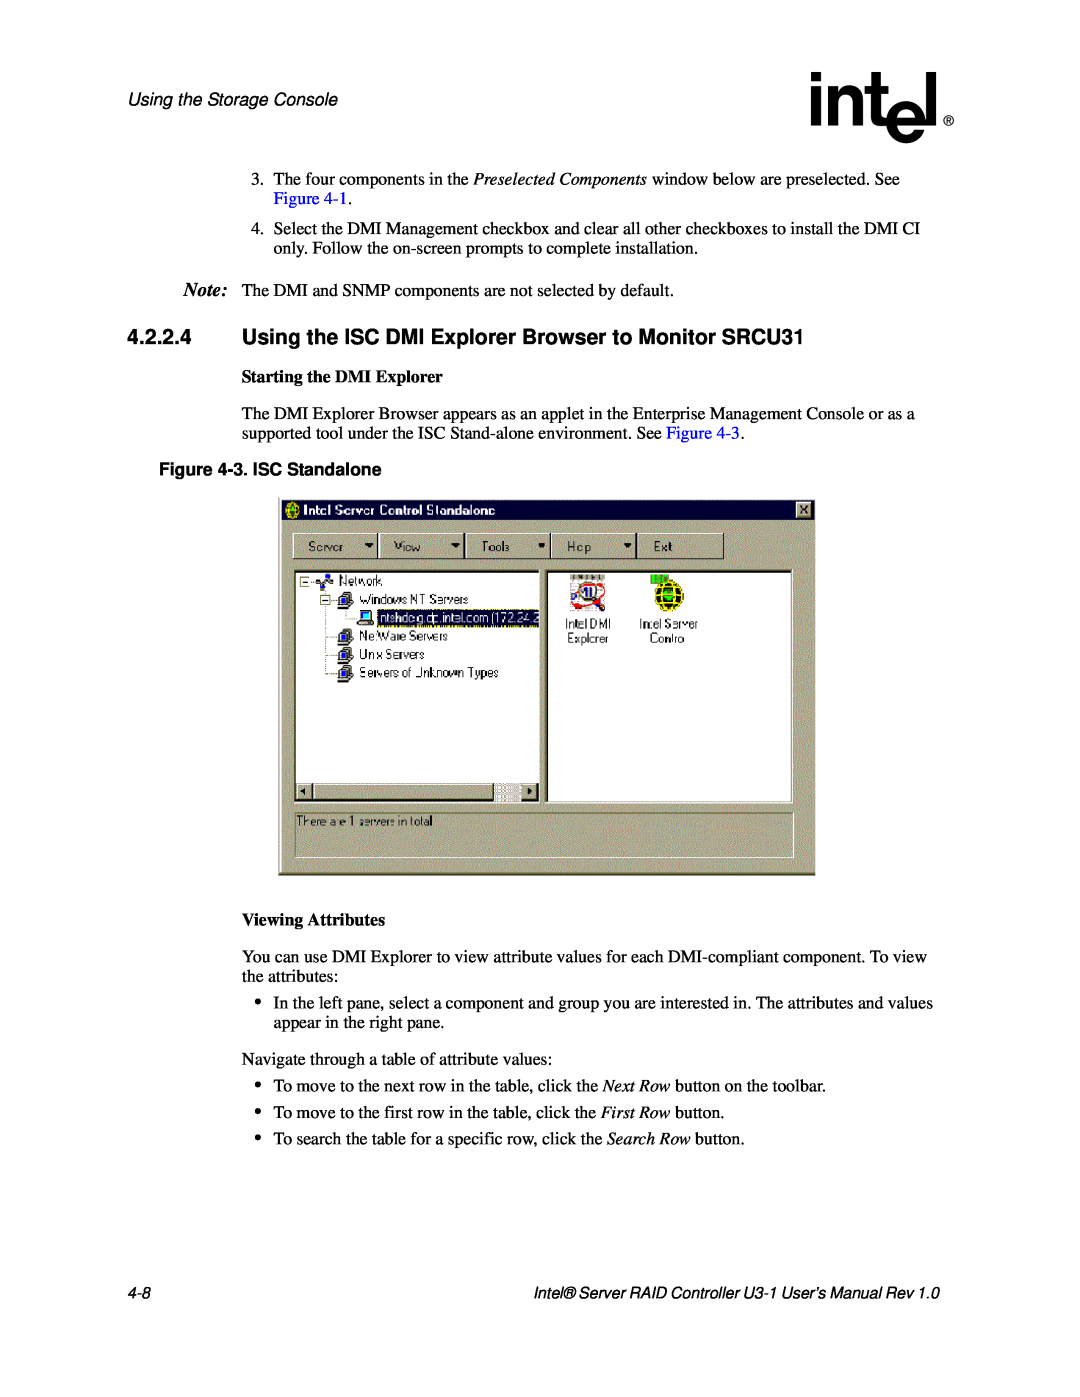 Intel SRCU31 user manual Using the Storage Console, Starting the DMI Explorer, 3.ISC Standalone, Viewing Attributes 